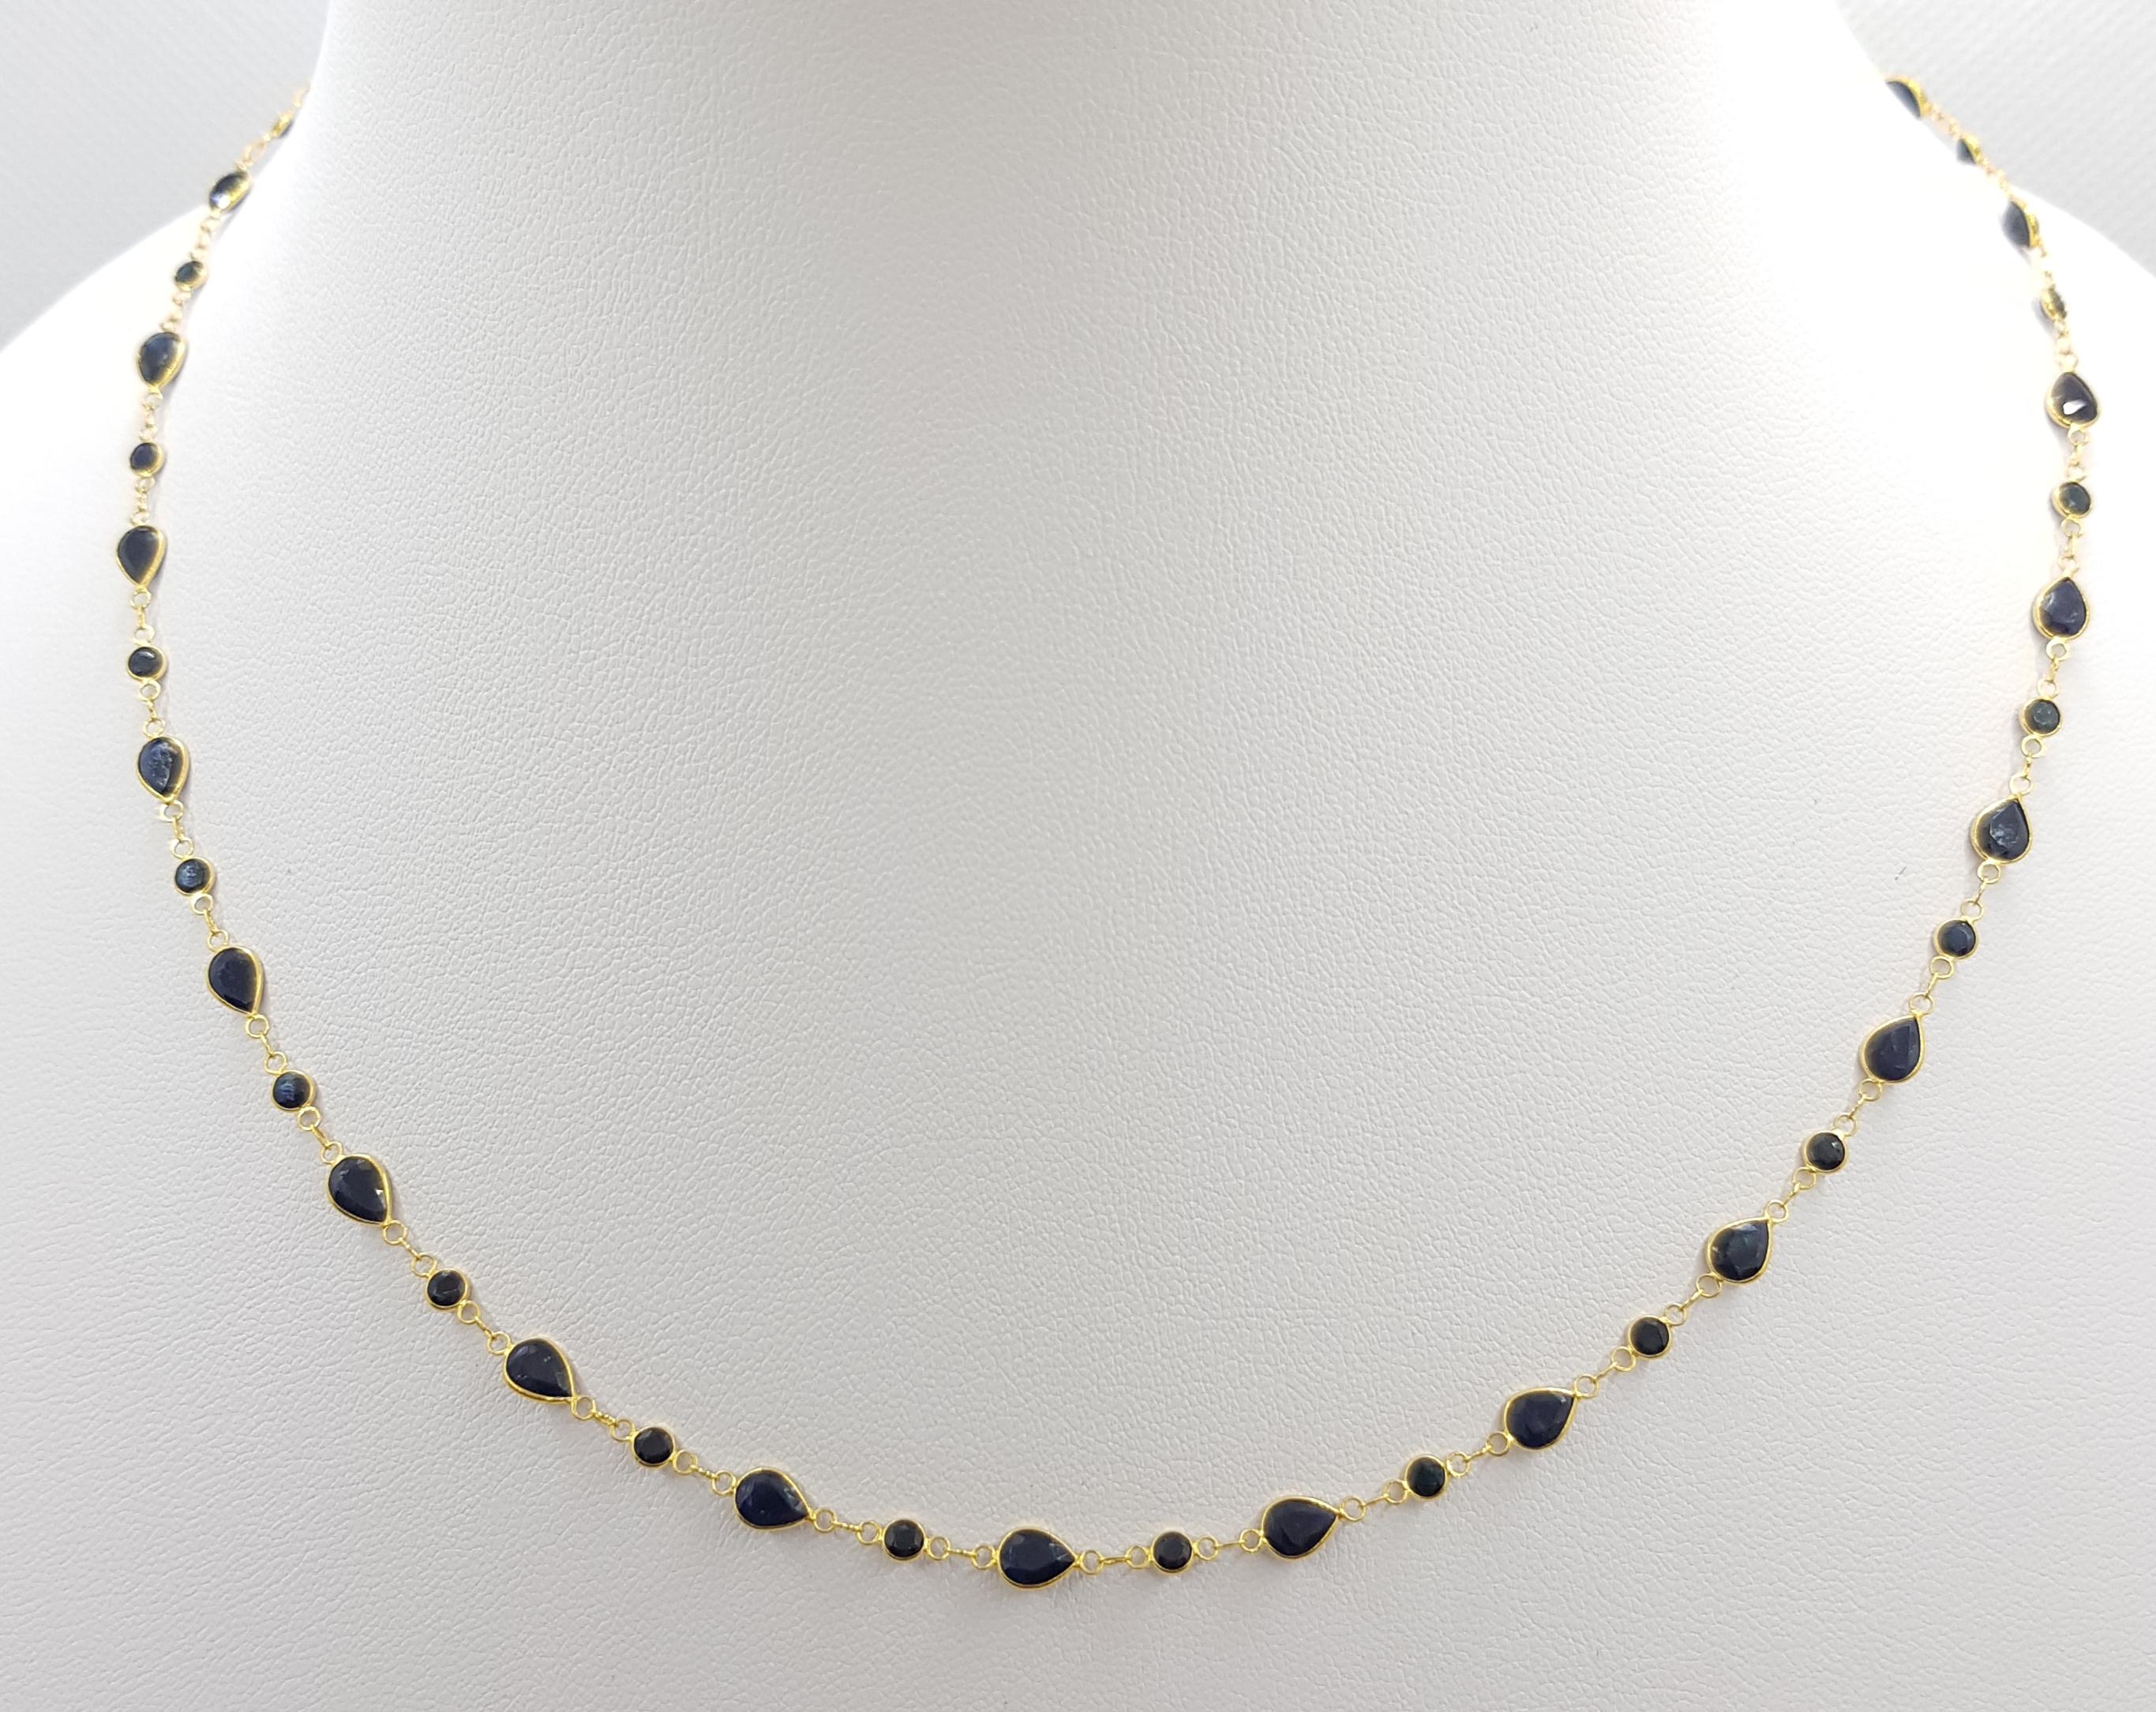 Blue Sapphire 11.60 carats Necklace set in 18 Karat Gold Settings

Width:  0.4 cm 
Length: 47.0 cm (18.5